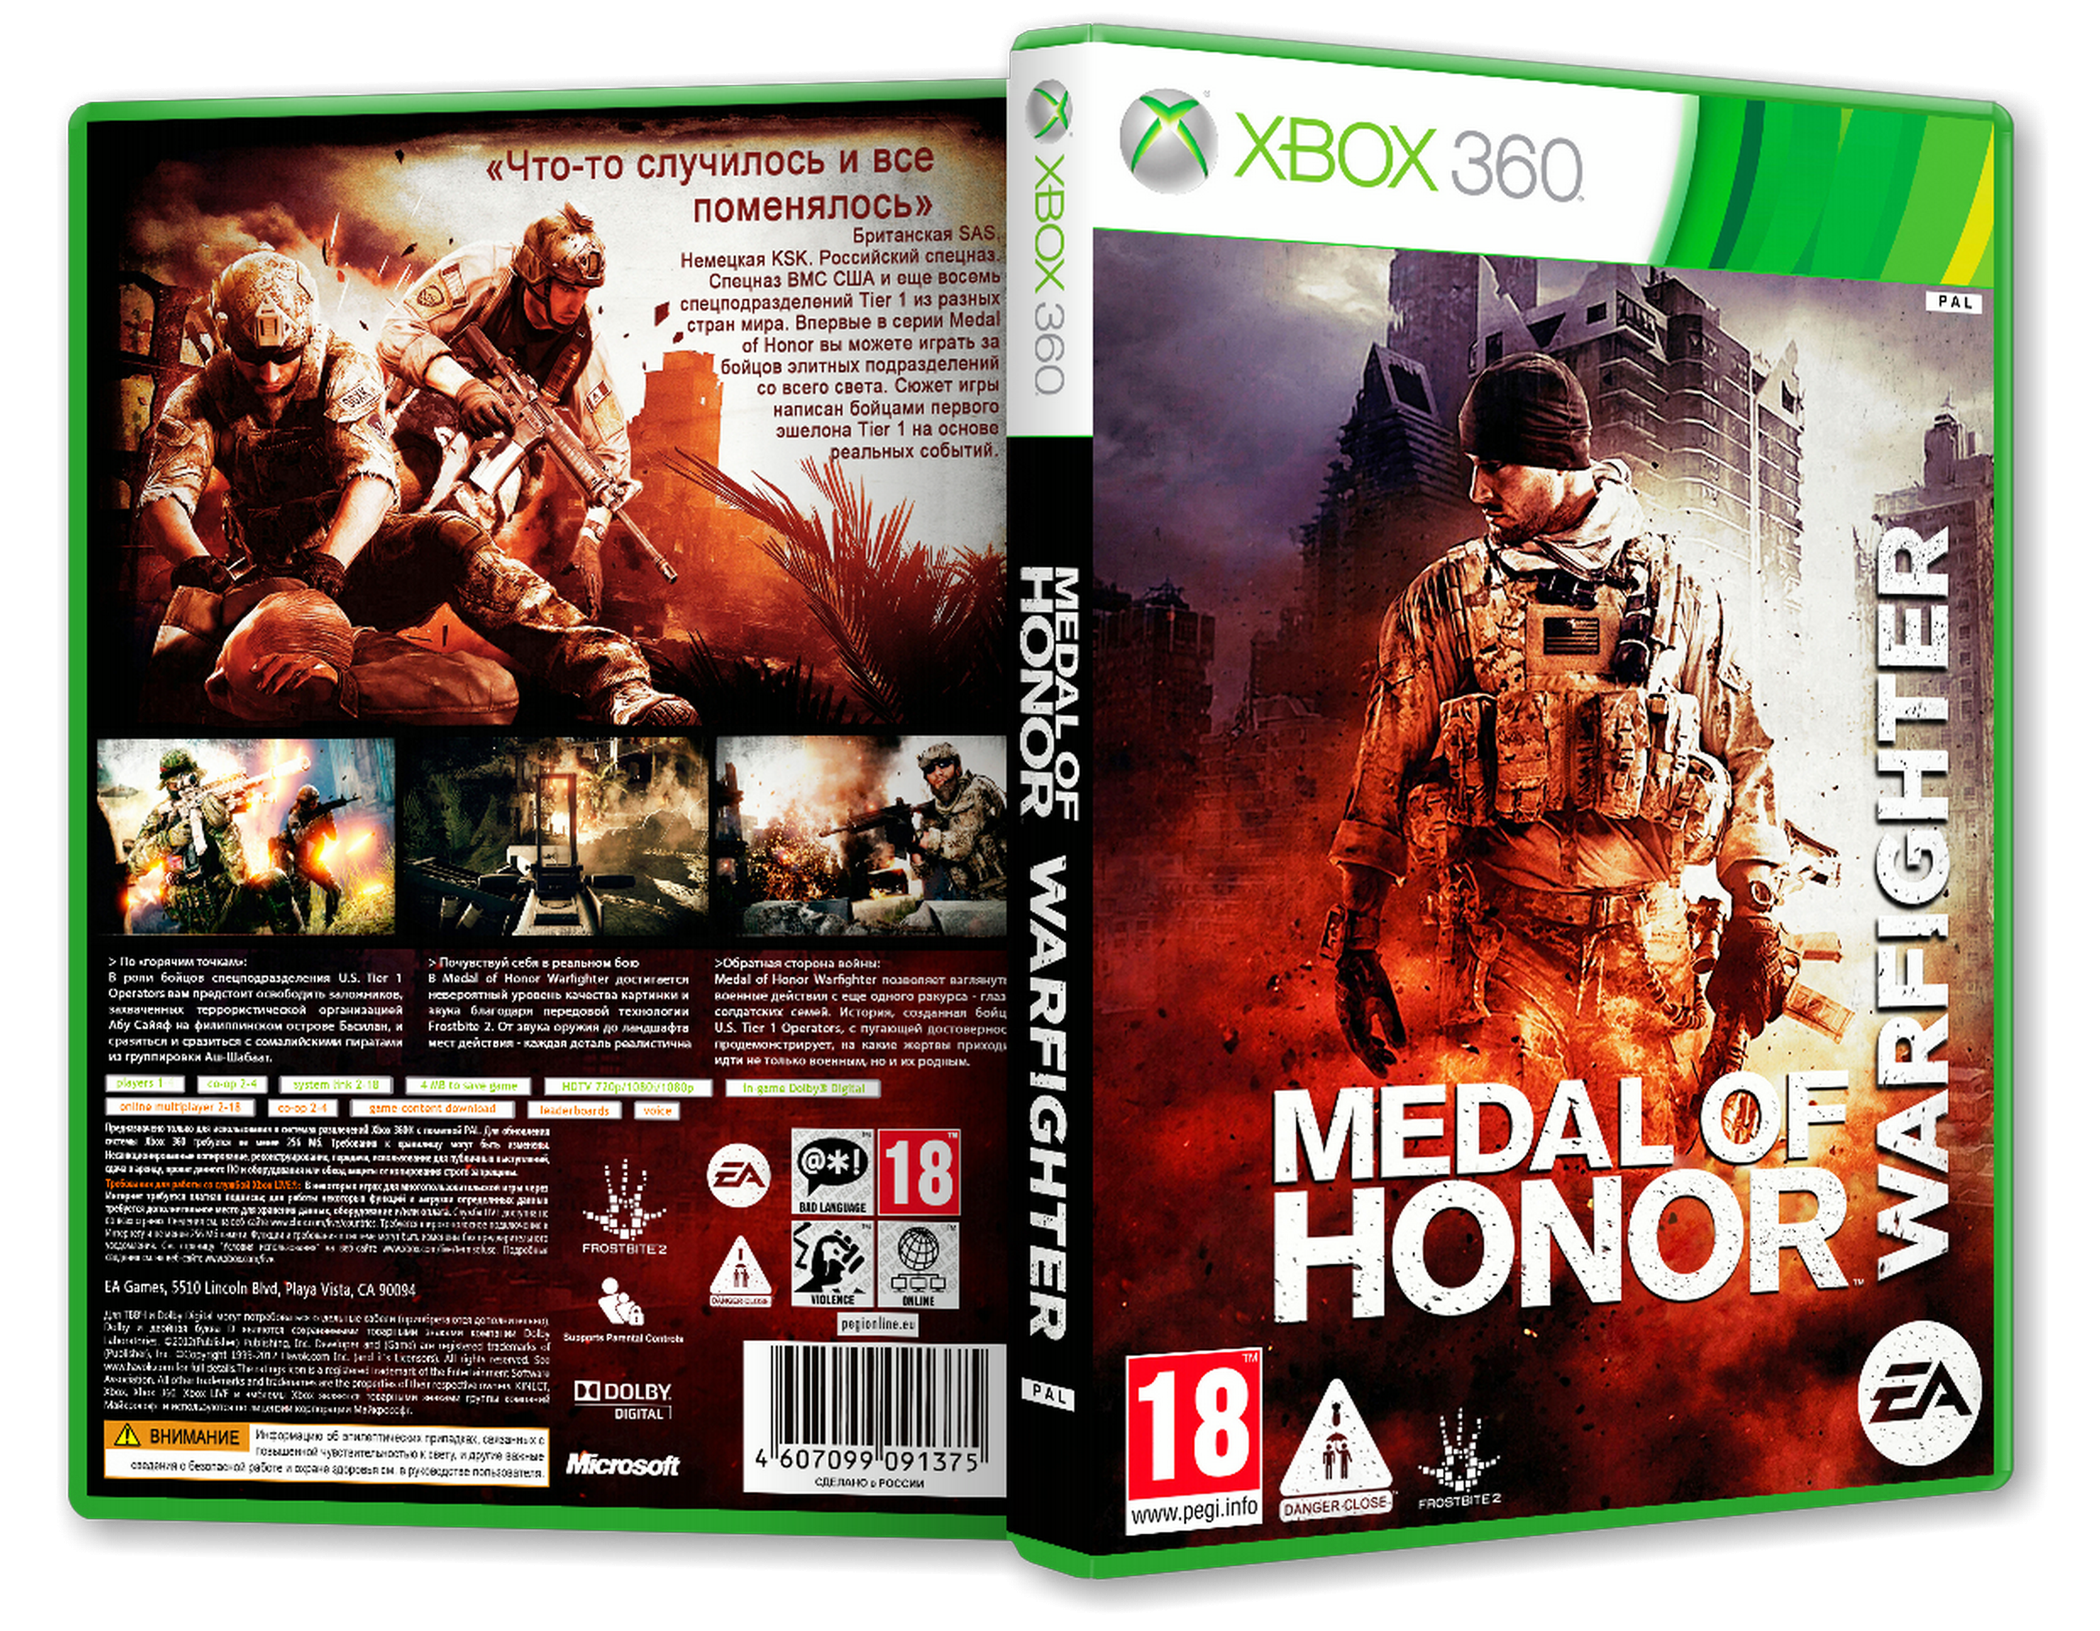 Medal of honor xbox 360. Medal of Honor Xbox 360 обложка. Medal of Honor: Warfighter Xbox 360 обложка. Медаль за отвагу игра на хбокс 360. Игры на Икс бокс 360 Medal of Honor.